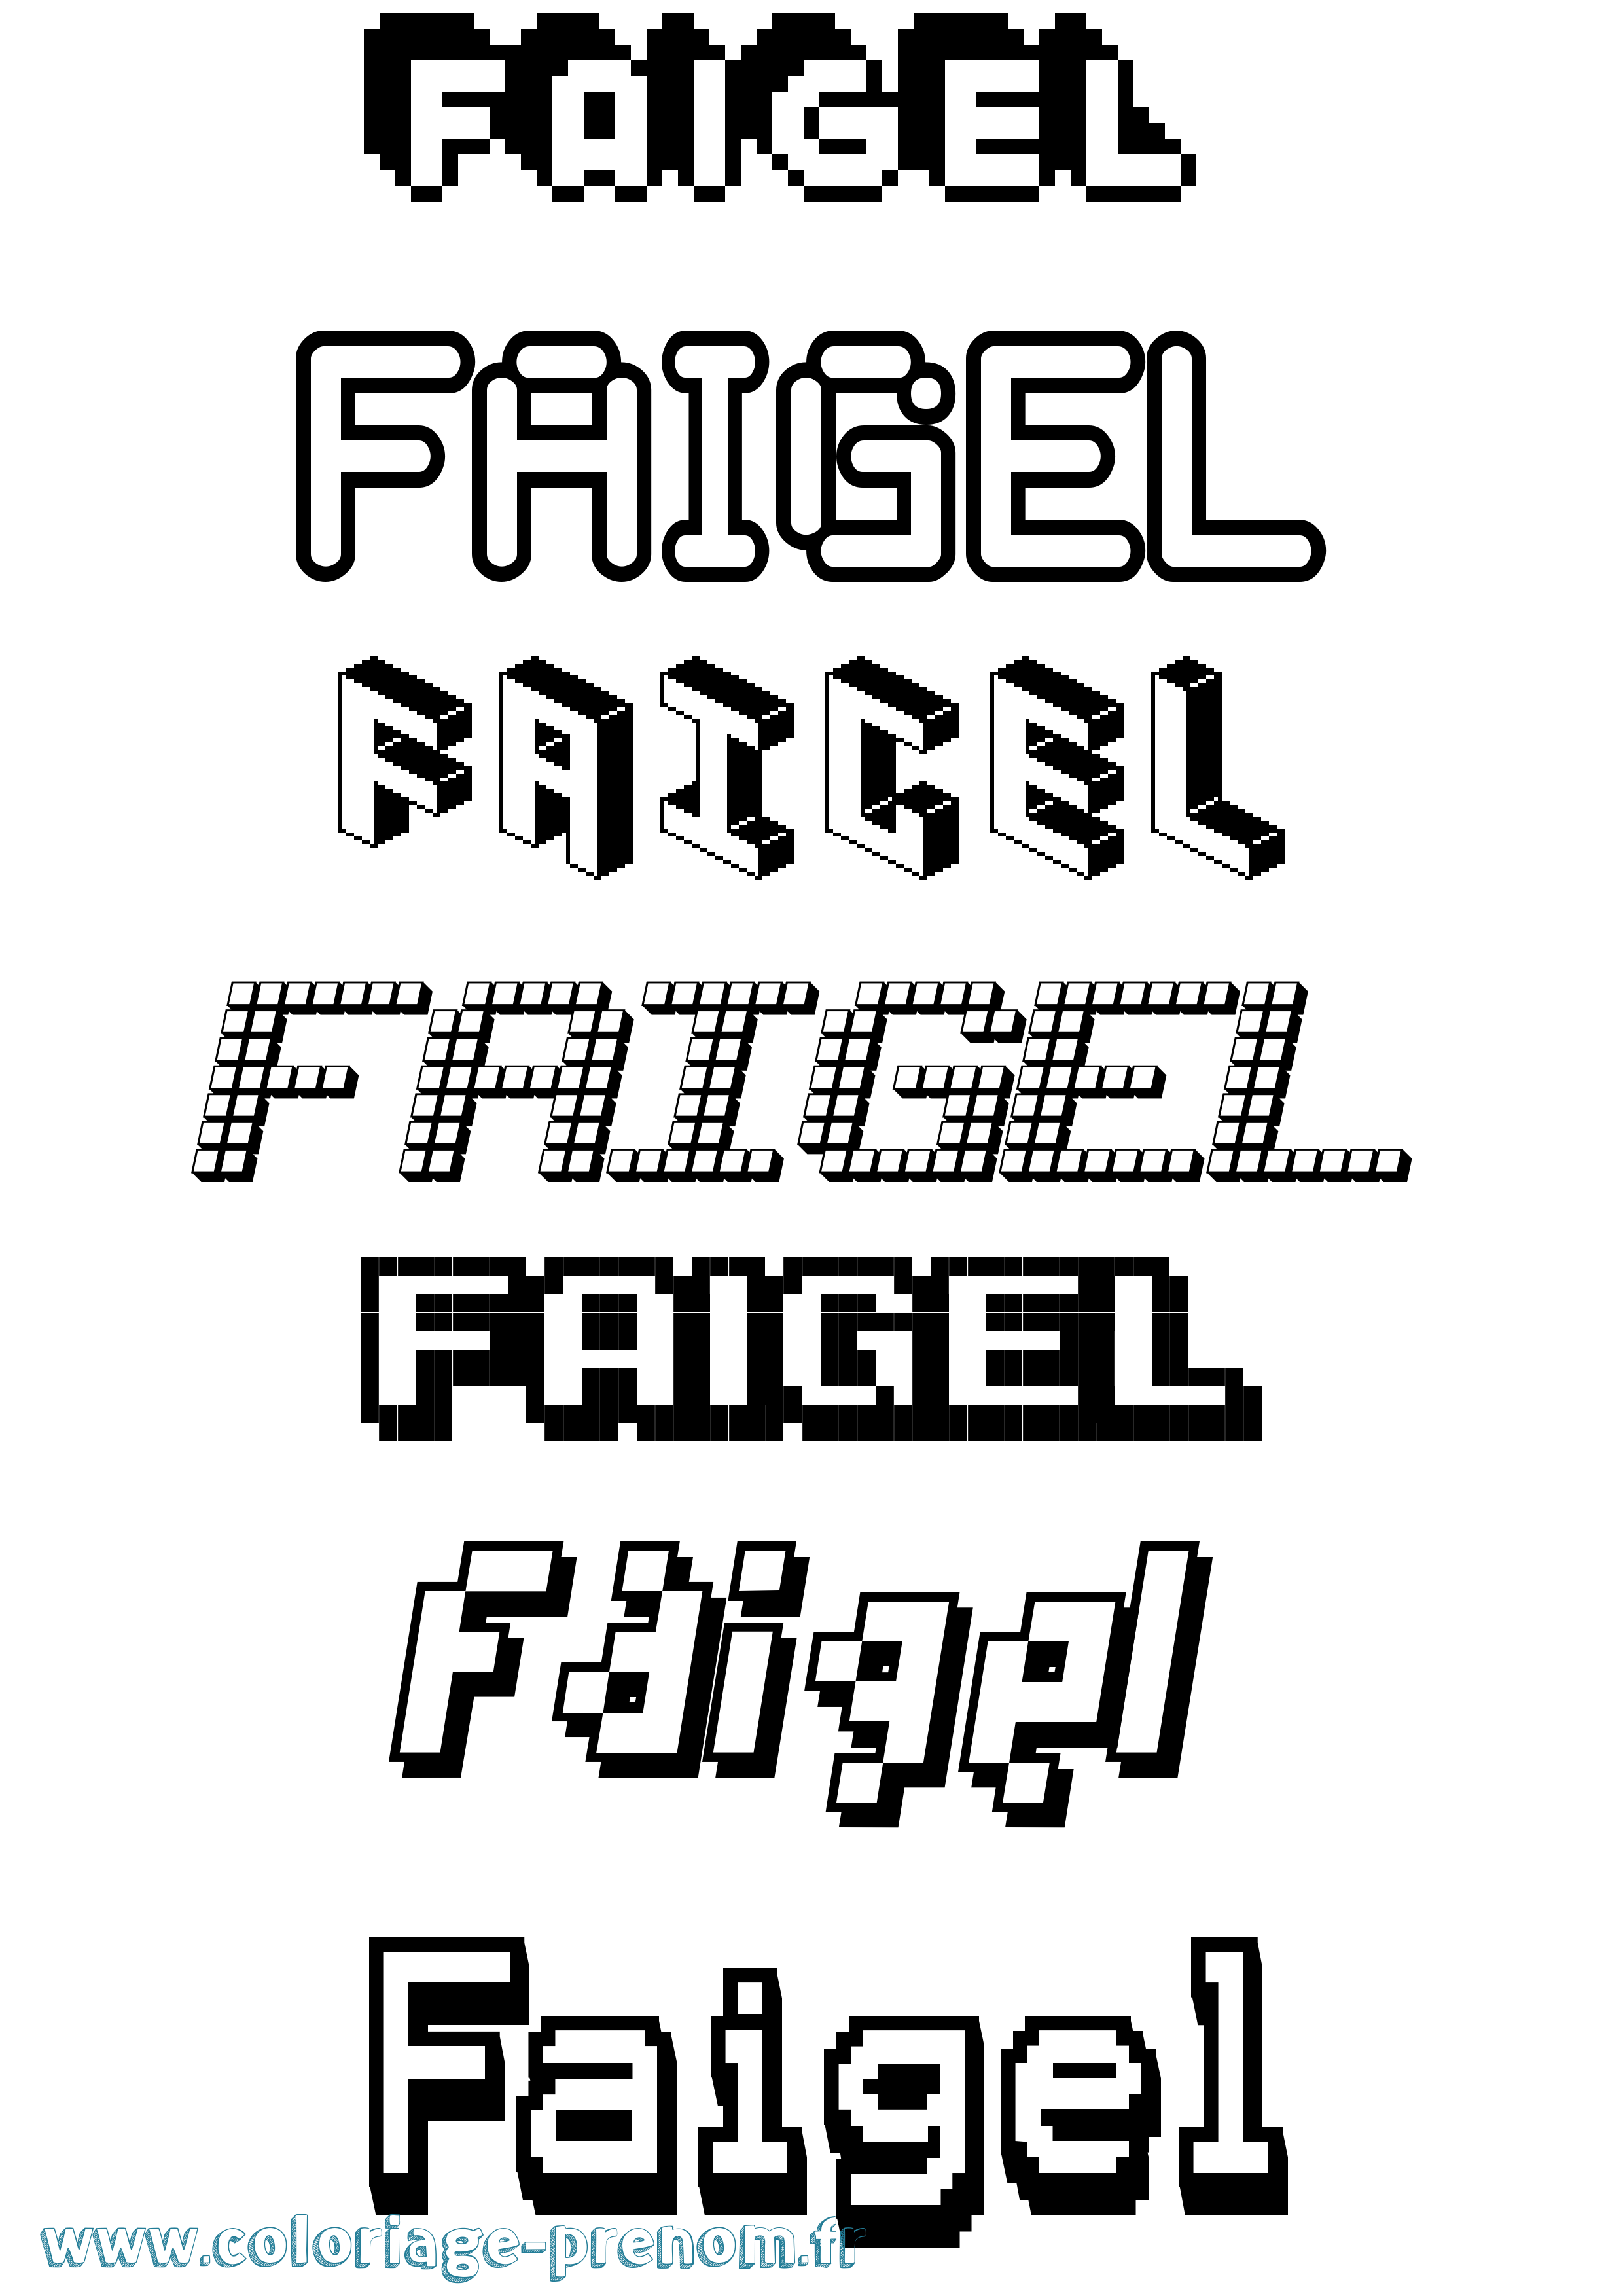 Coloriage prénom Faigel Pixel